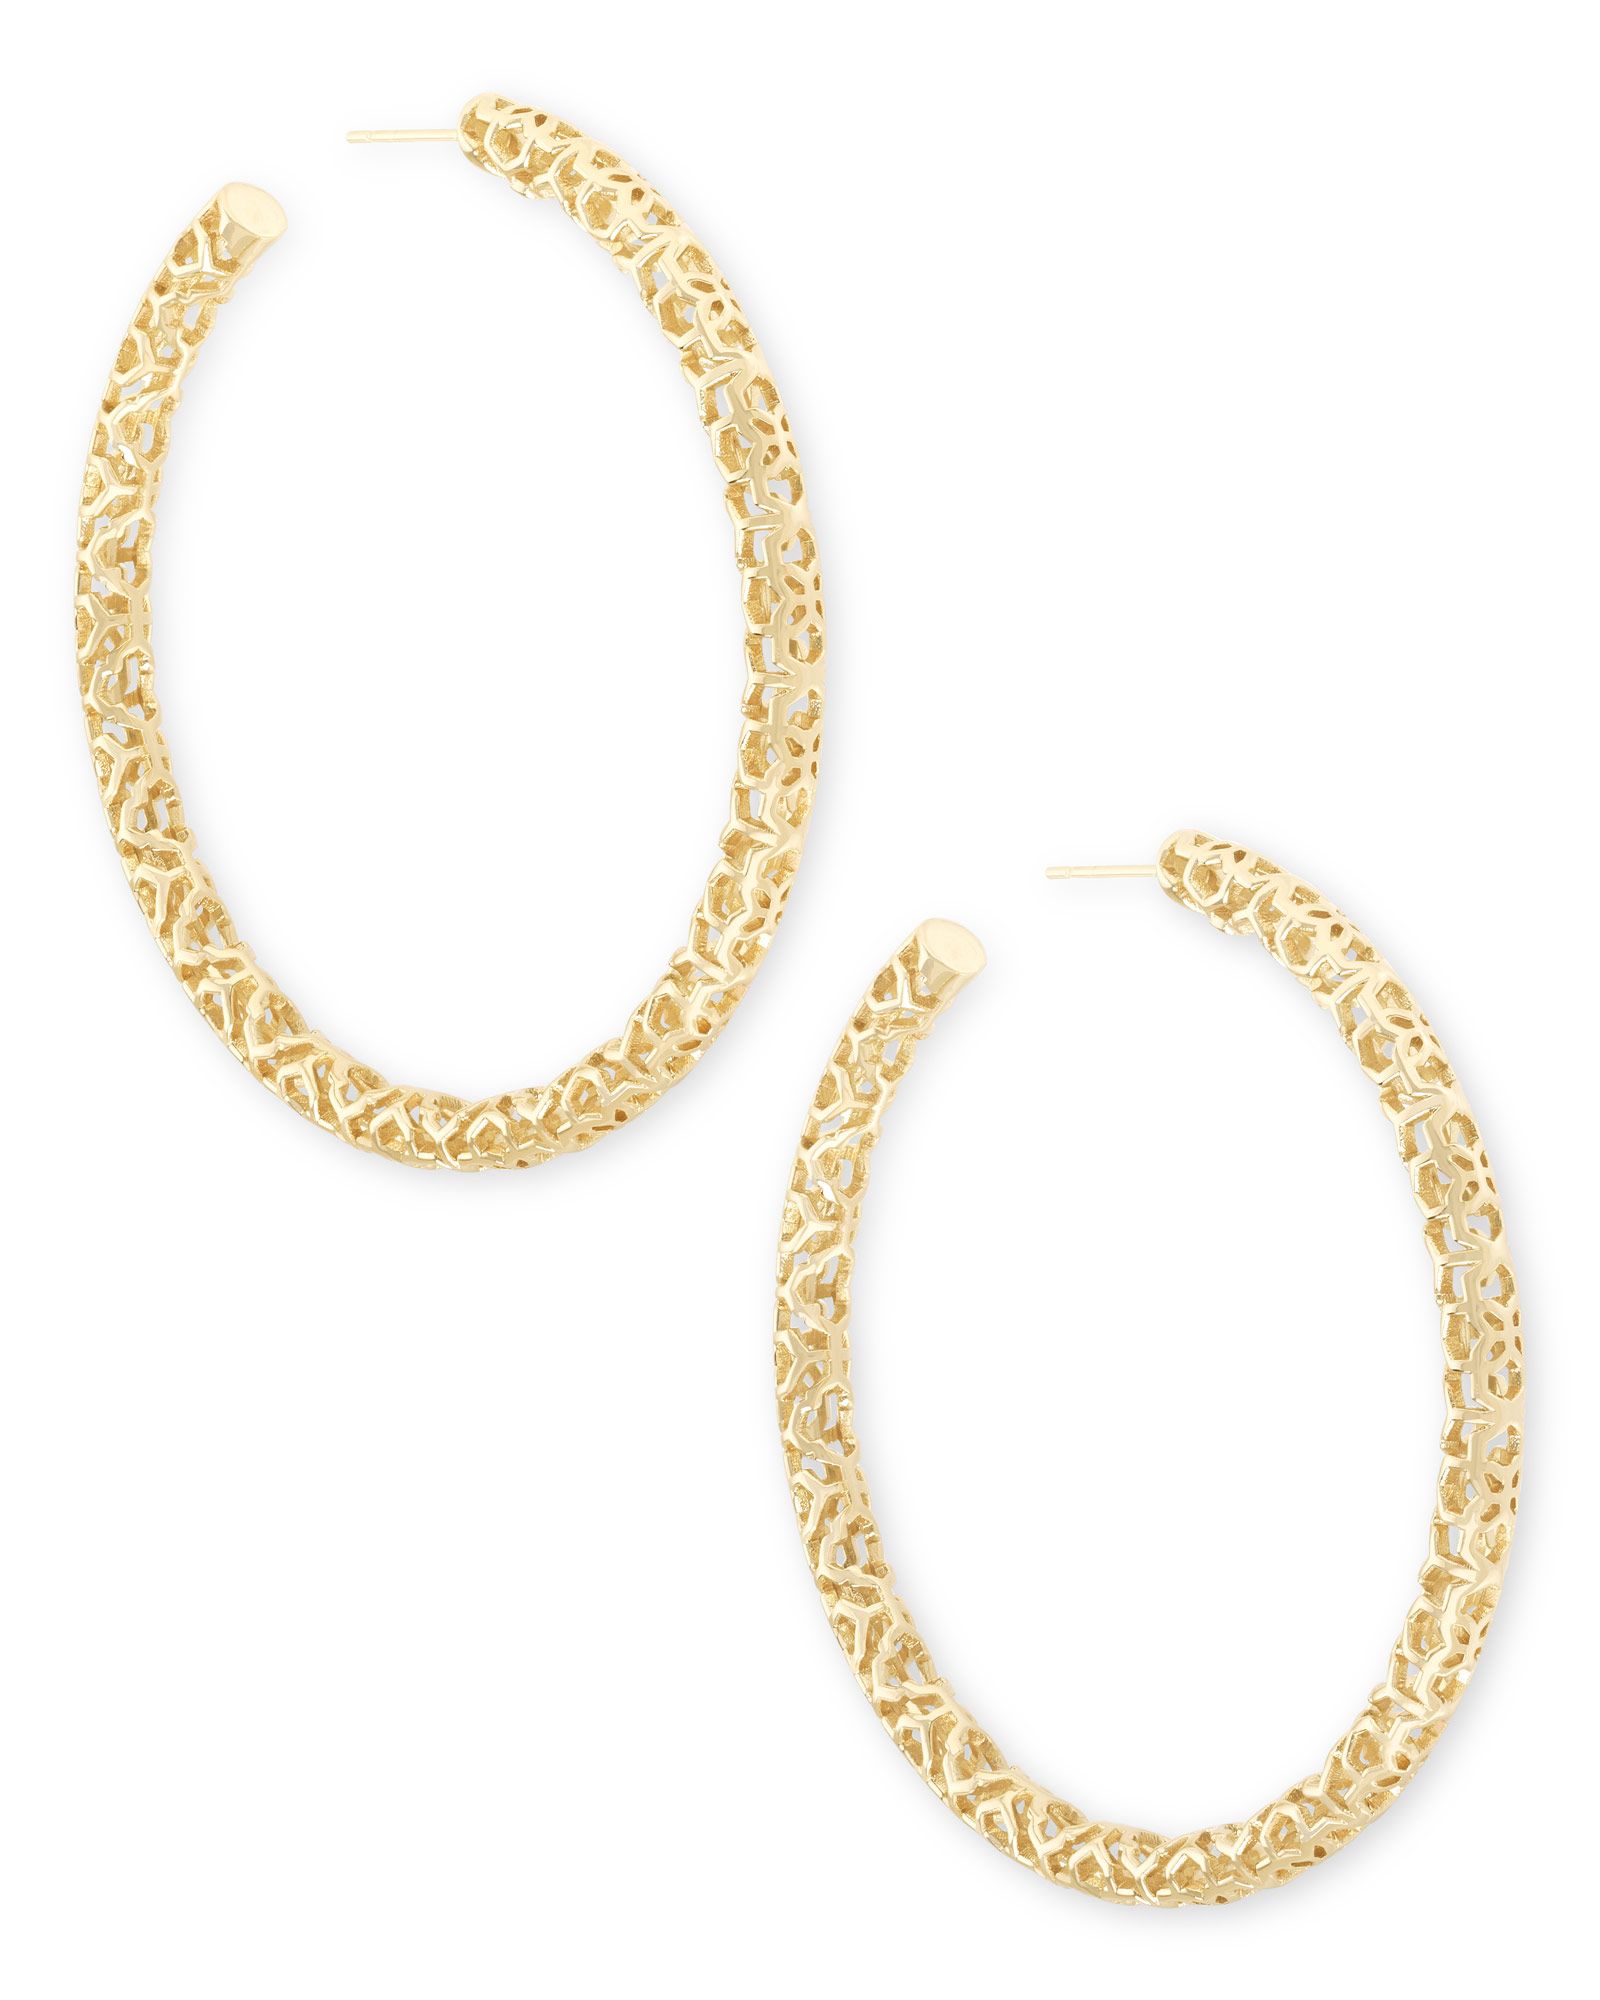 Maggie Hoop Earrings in Gold Filigree | Kendra Scott